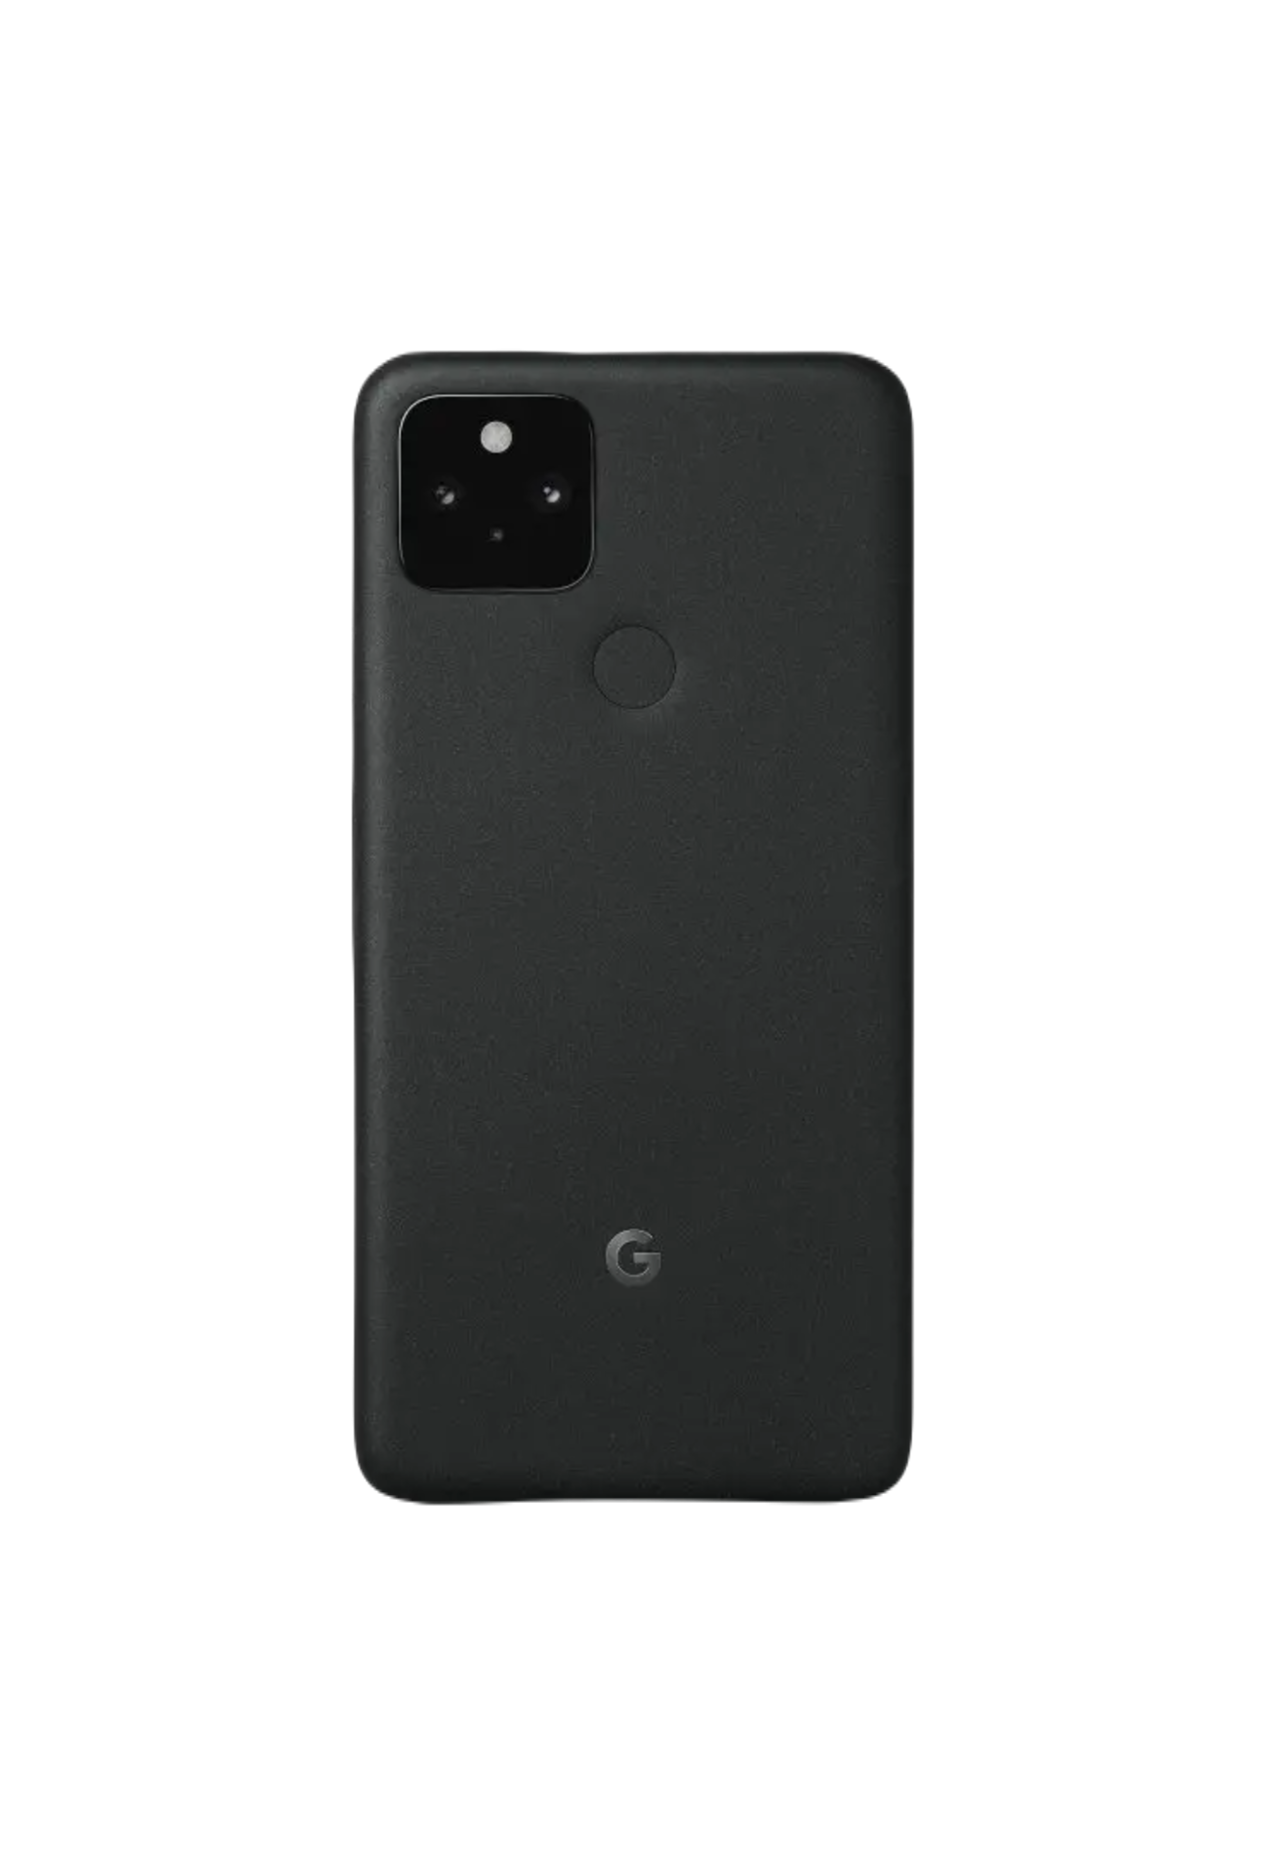 Google Pixel 5